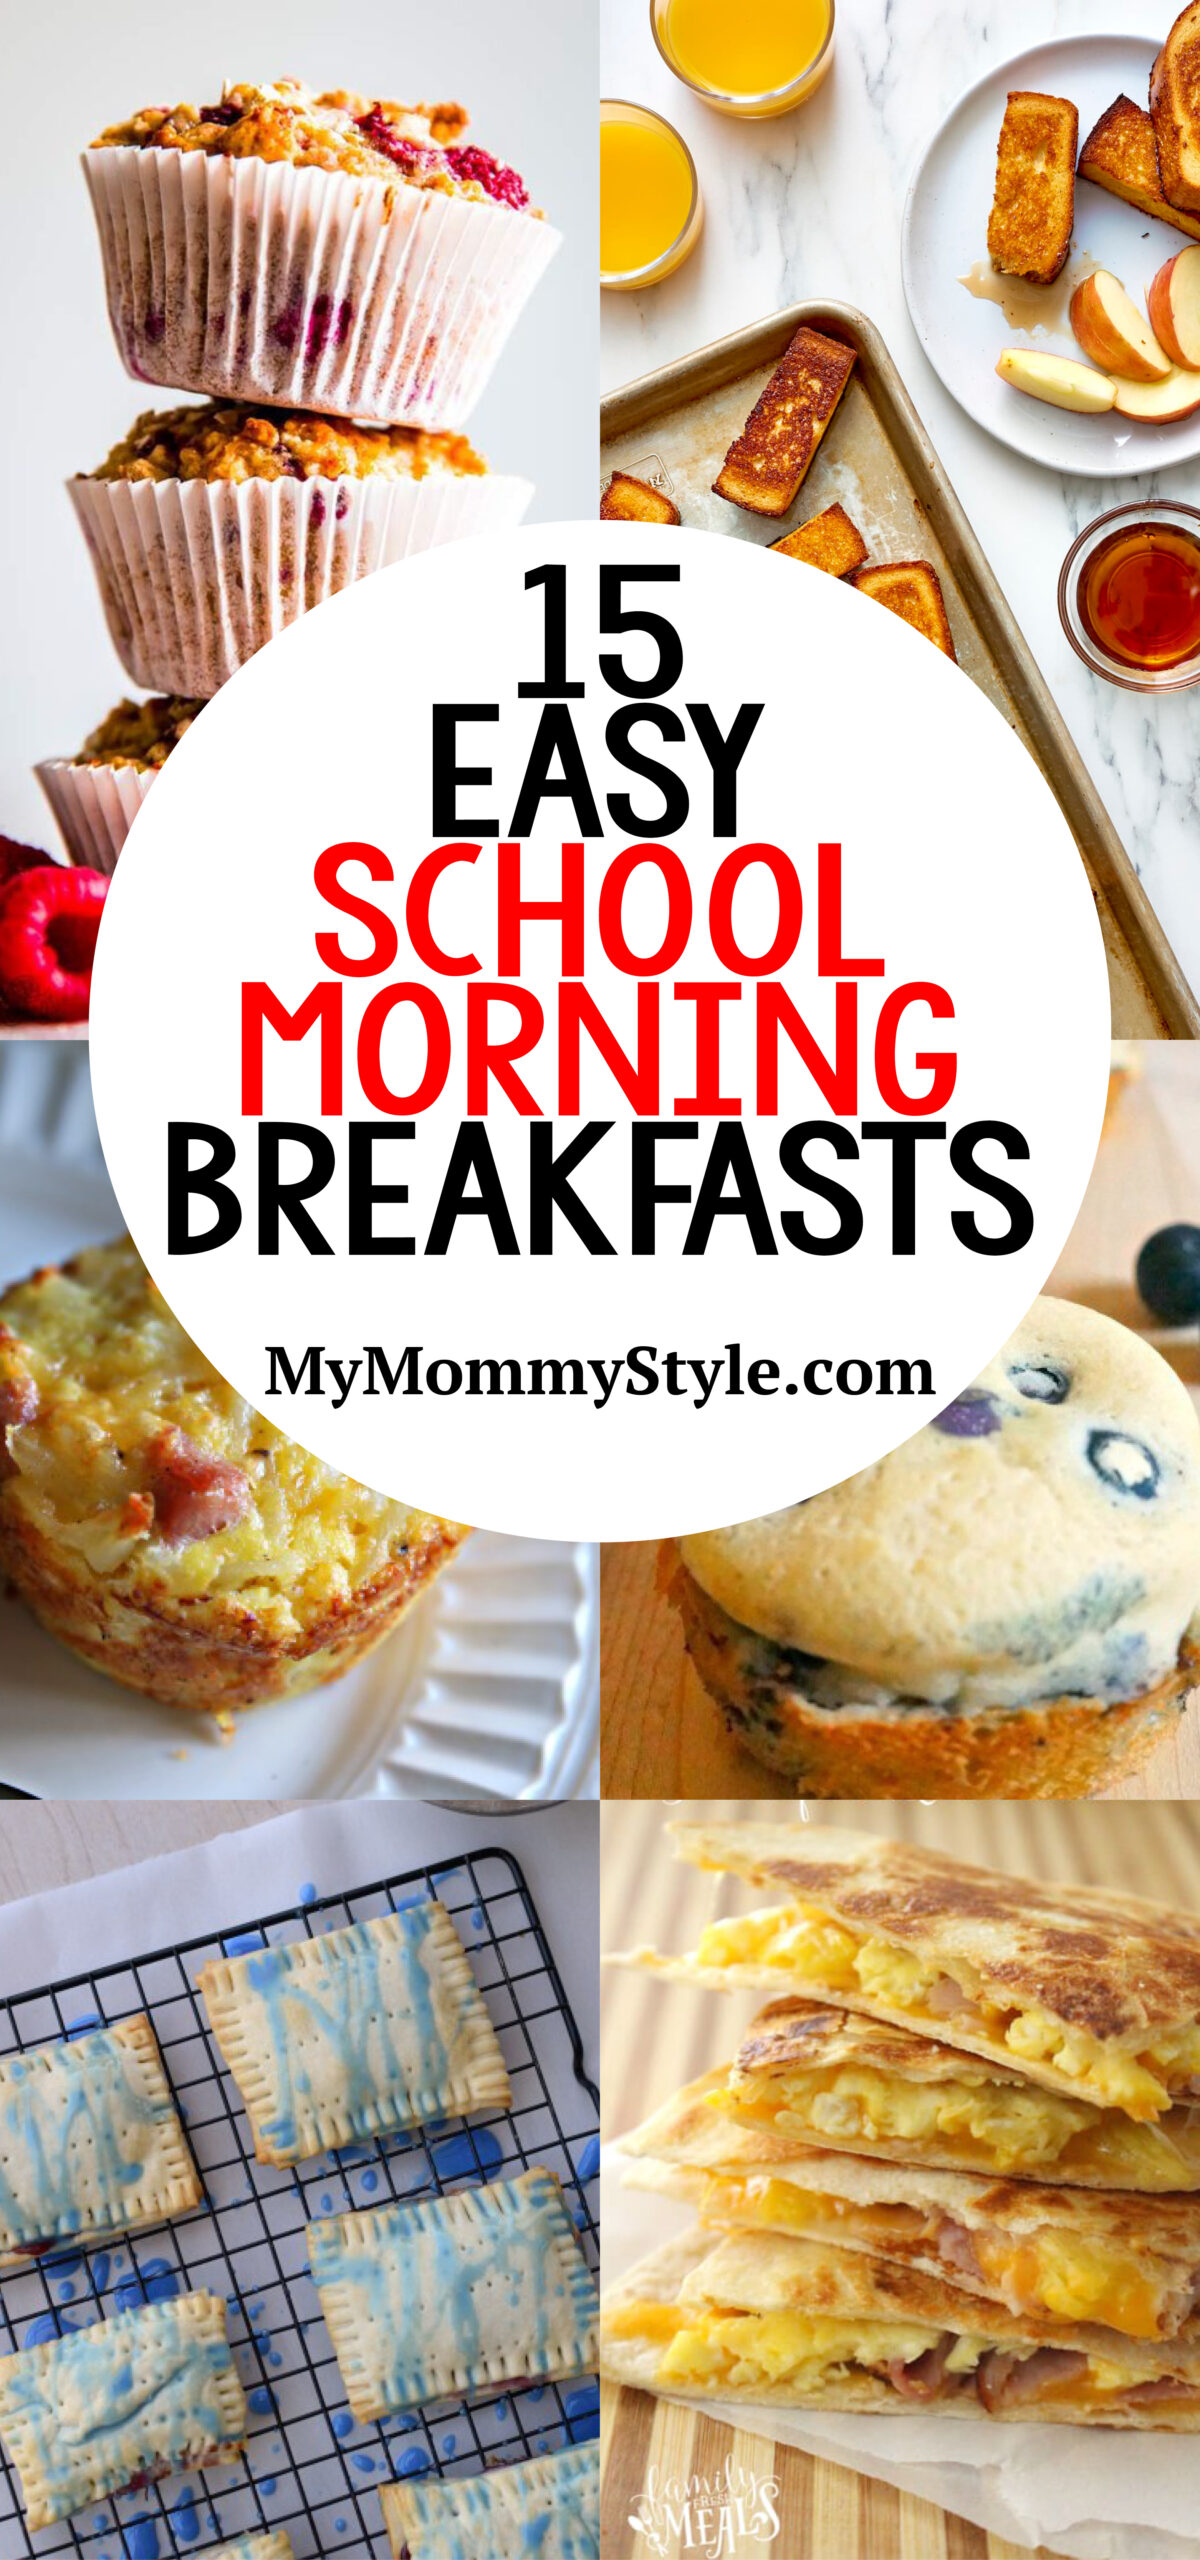 15 Easy School Morning Breakfasts | My Mommy Style